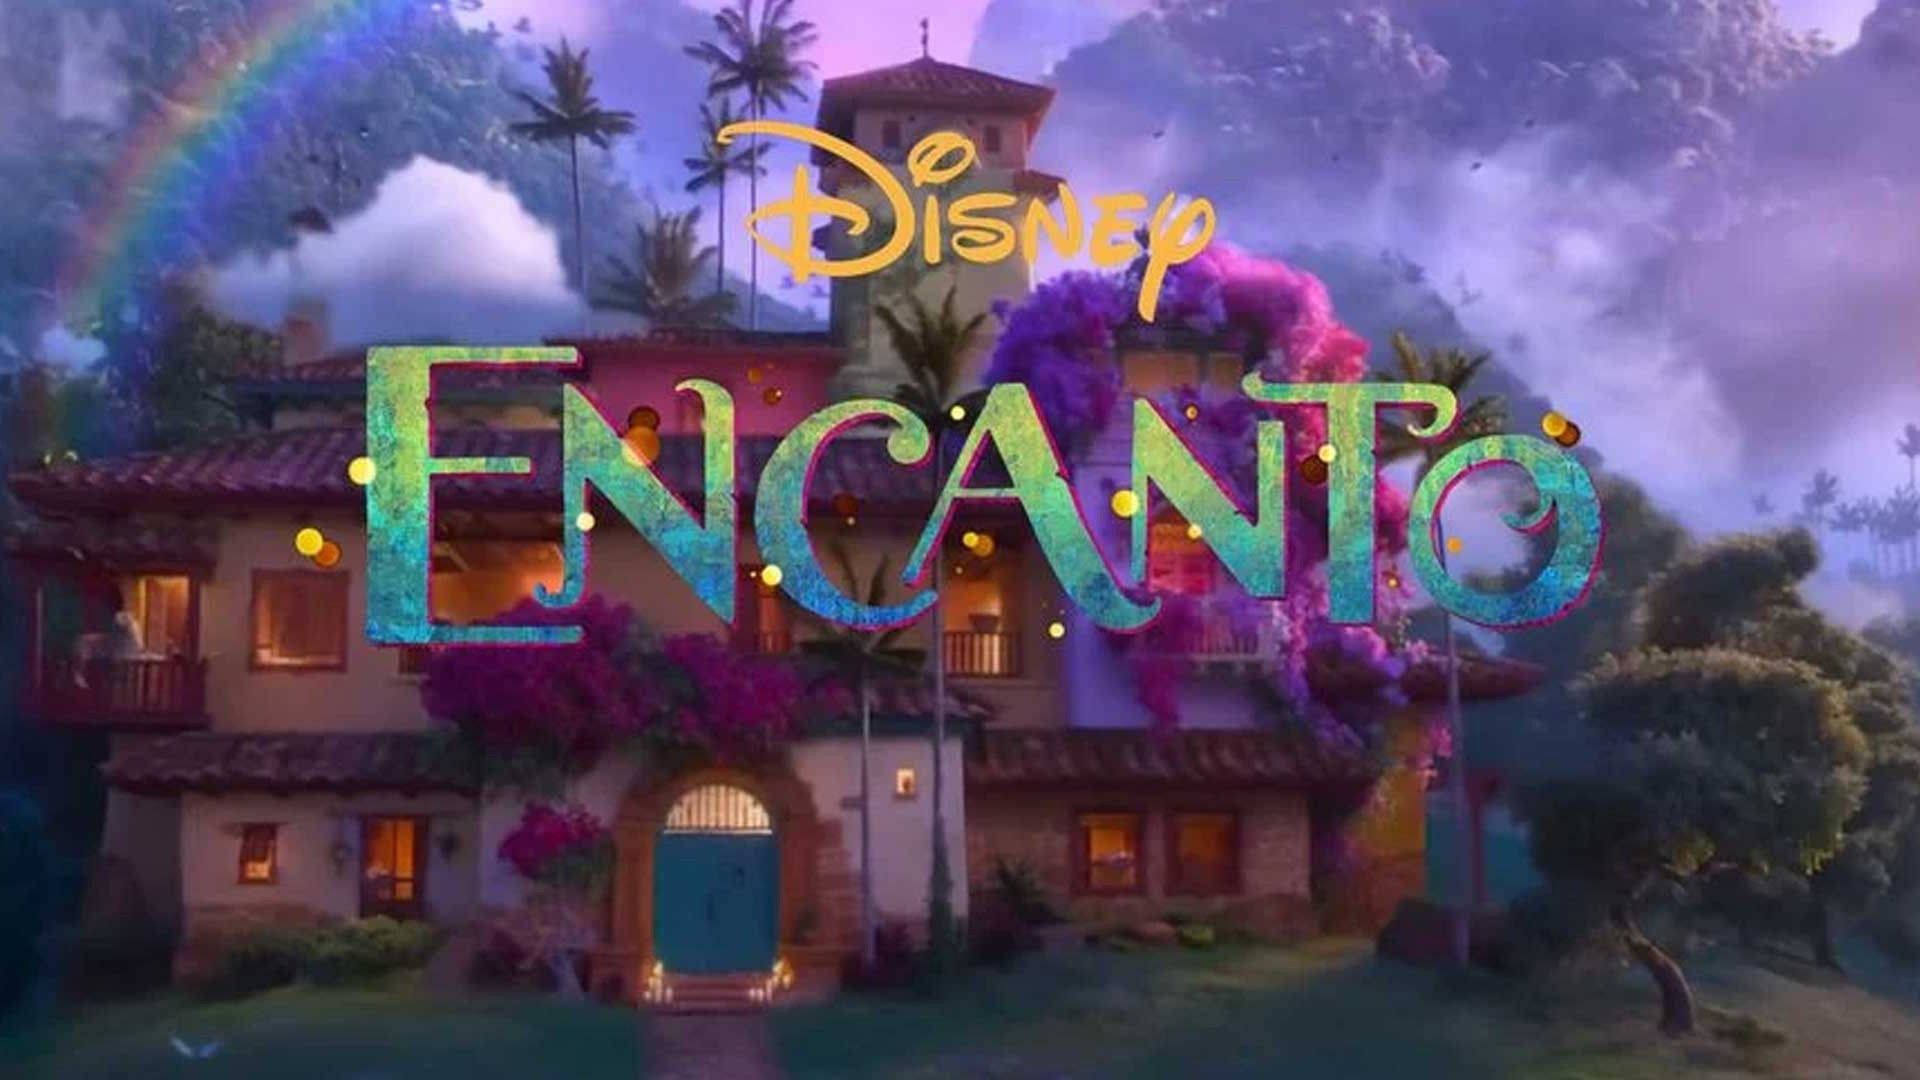 Disneys Enchanted - trailer Wallpaper